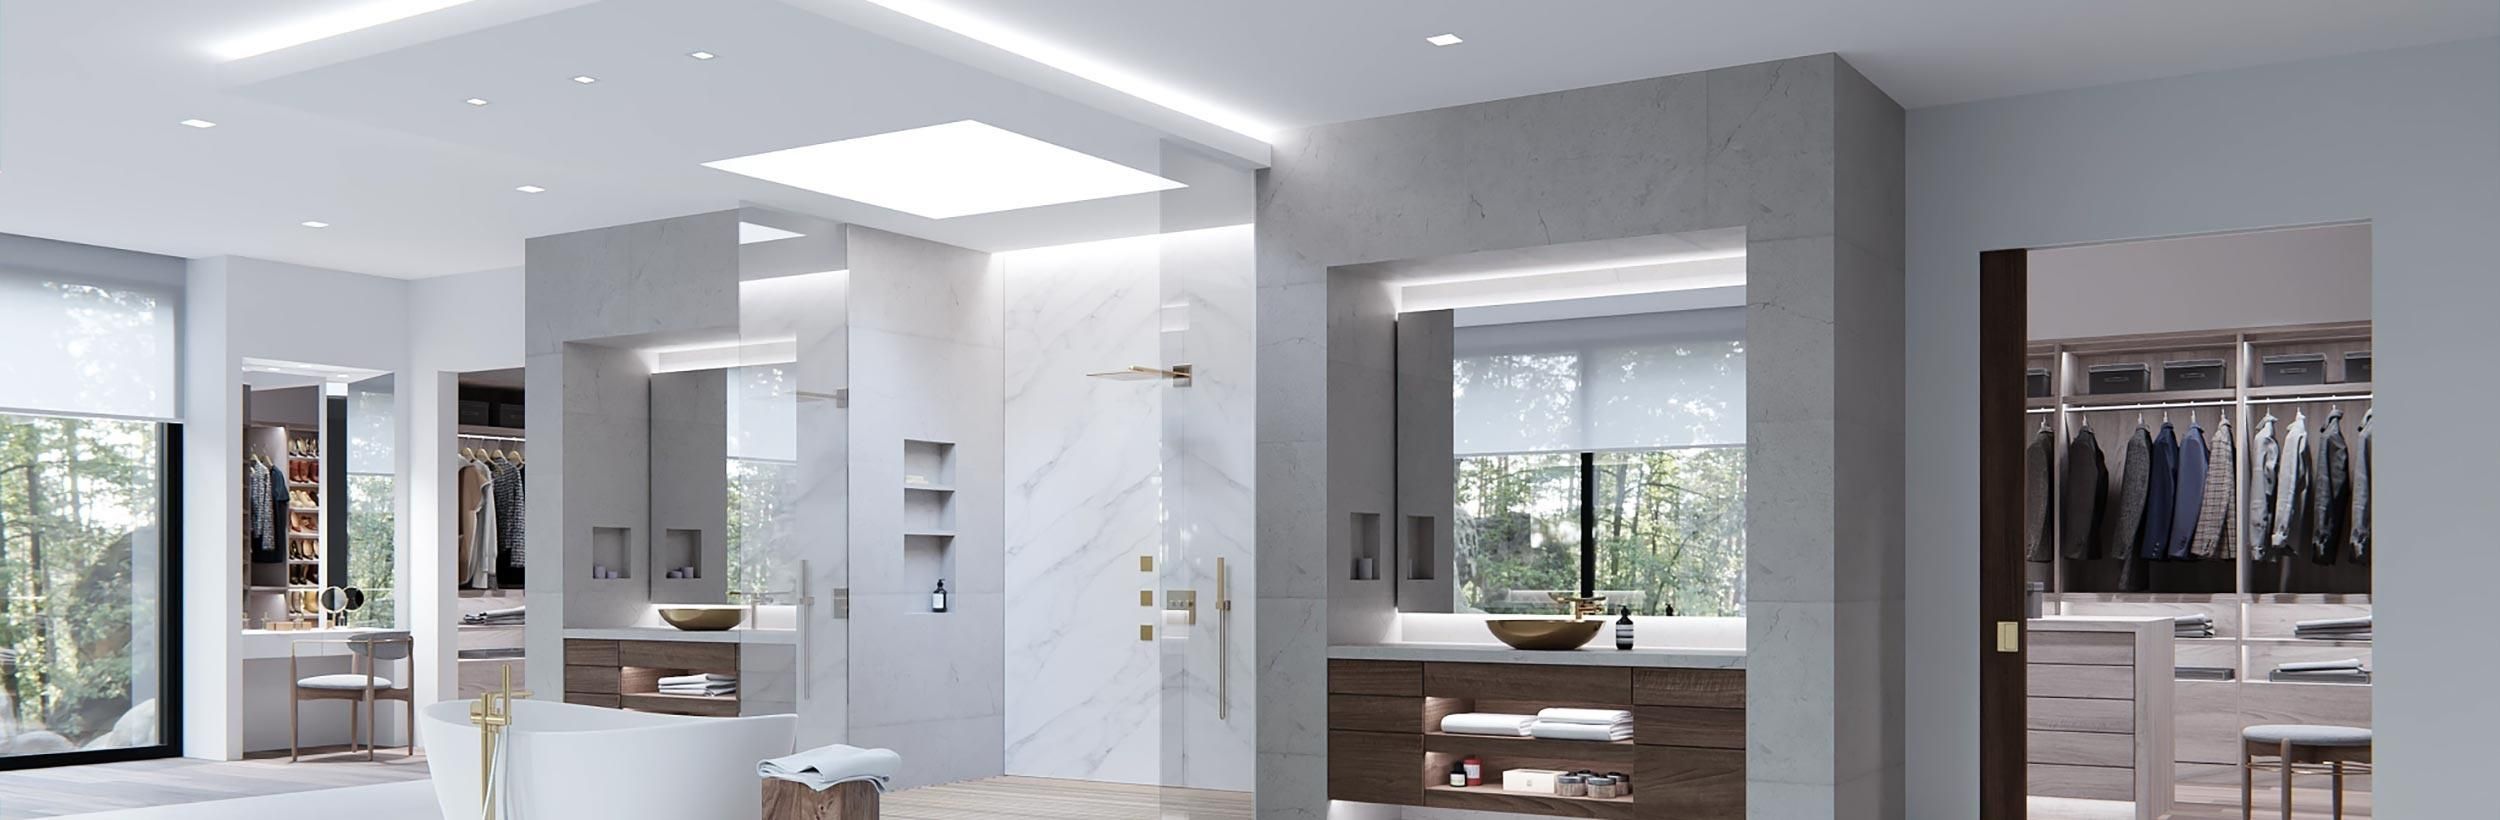 Linear LED lighting in a modern bathroom